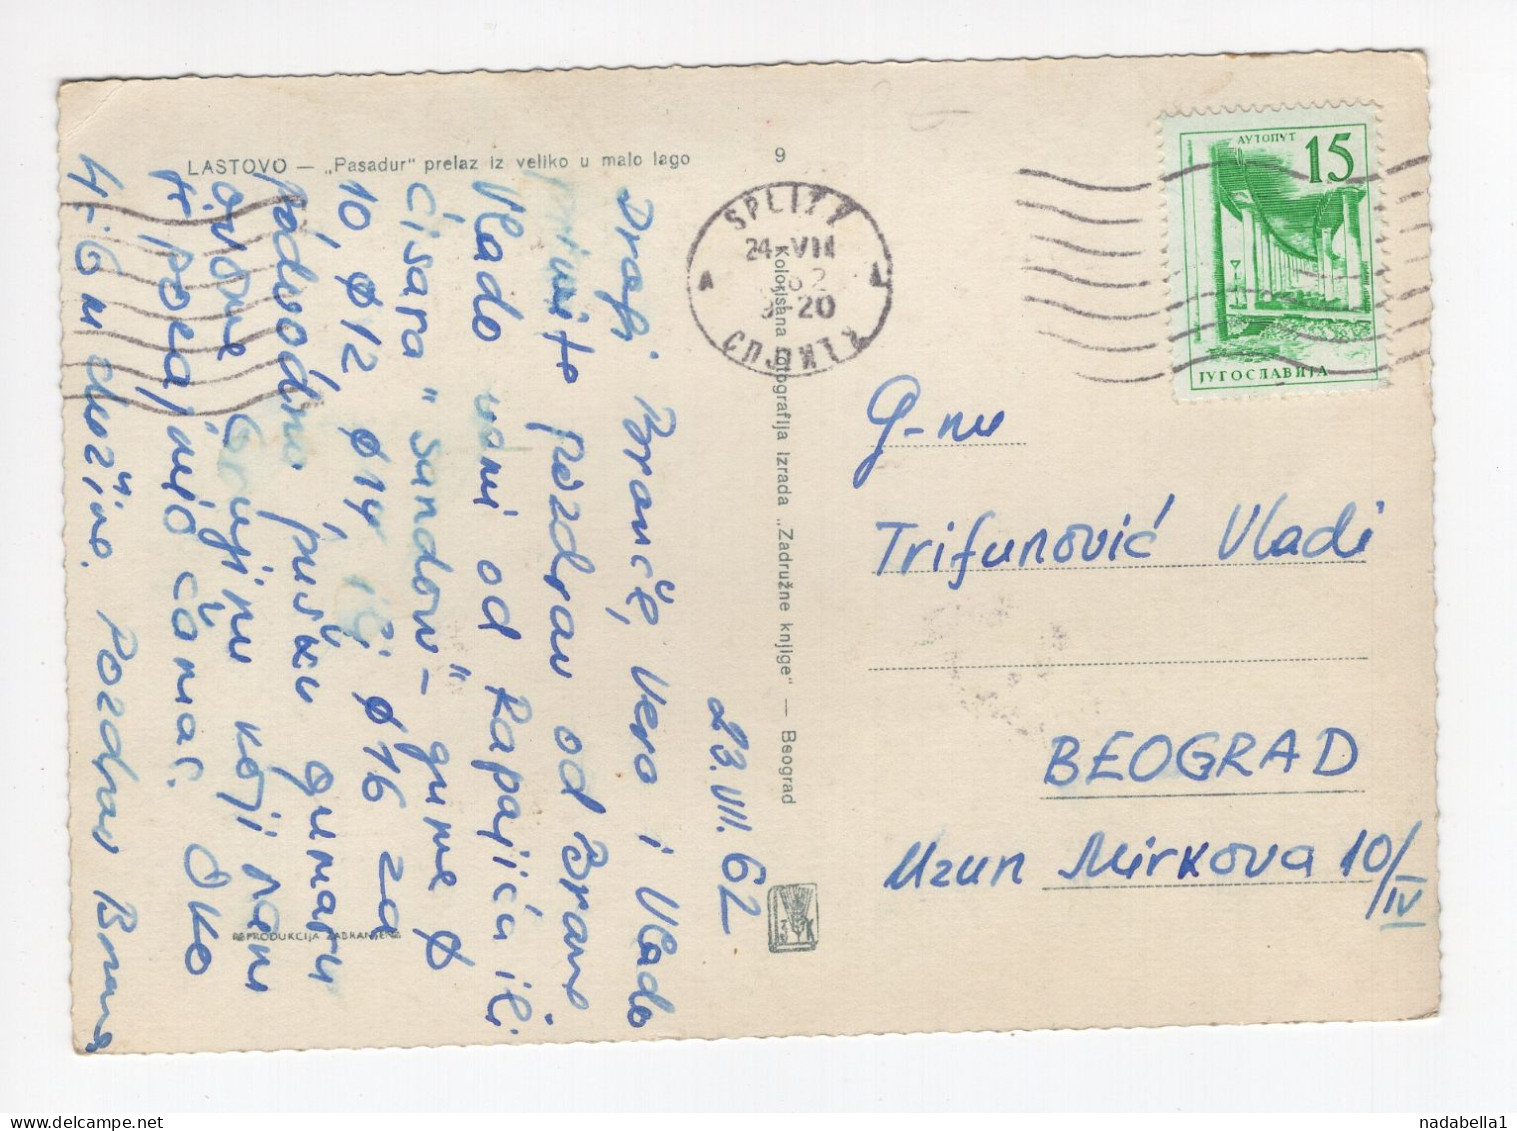 1962. YUGOSLAVIA,CROATIA,LASTOVO,PASADUR,POSTCARD,USED - Yugoslavia